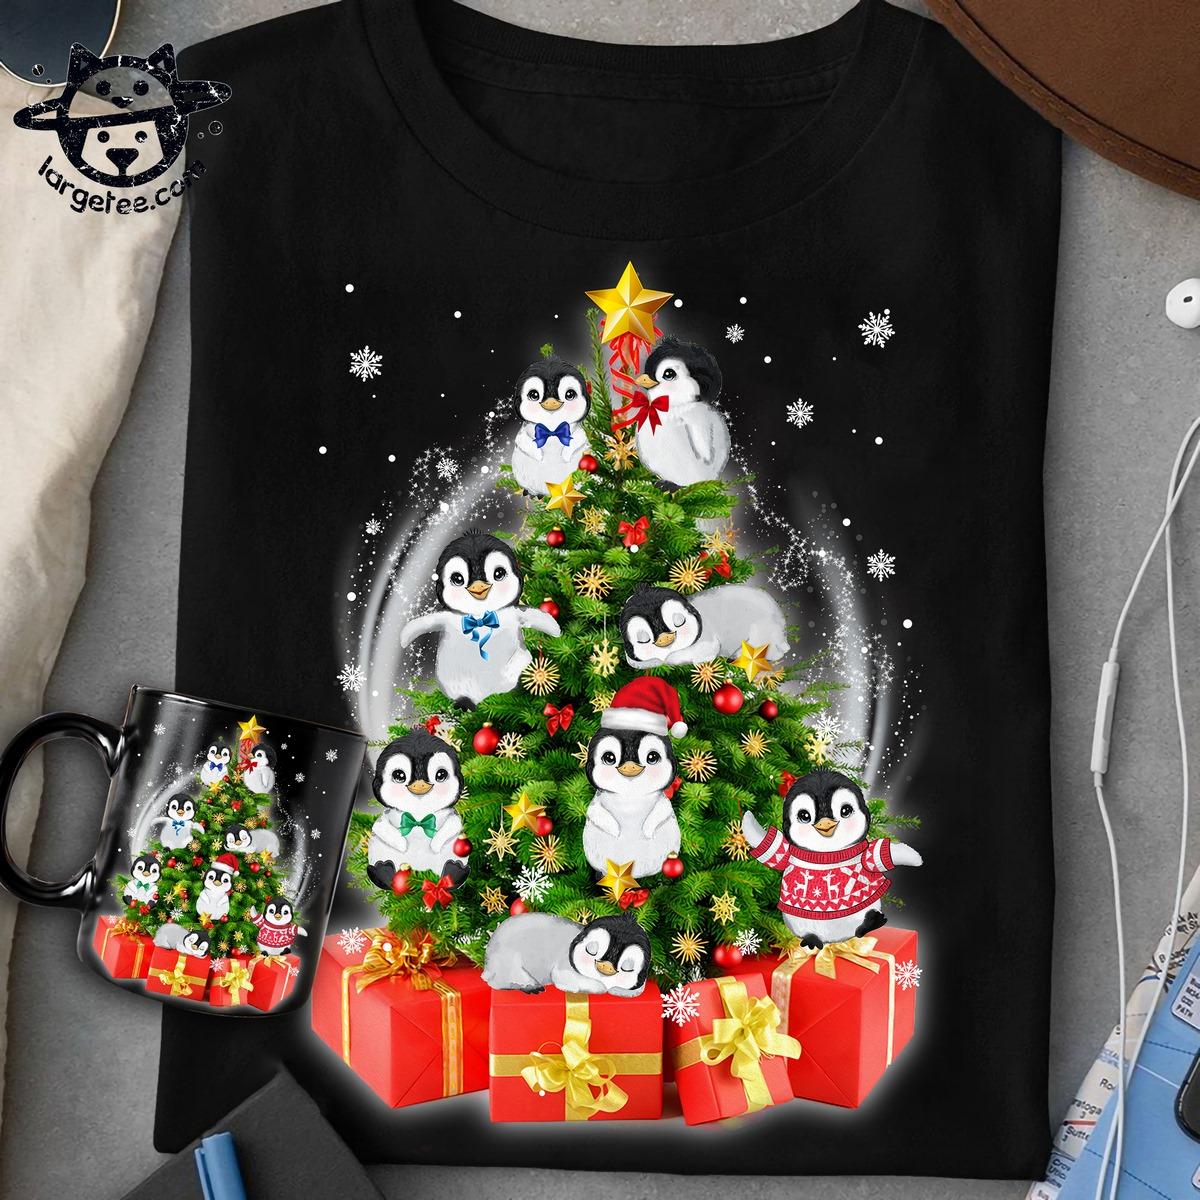 Penguins and Christmas tree - Christmas ugly sweater, Christmas present and penguins